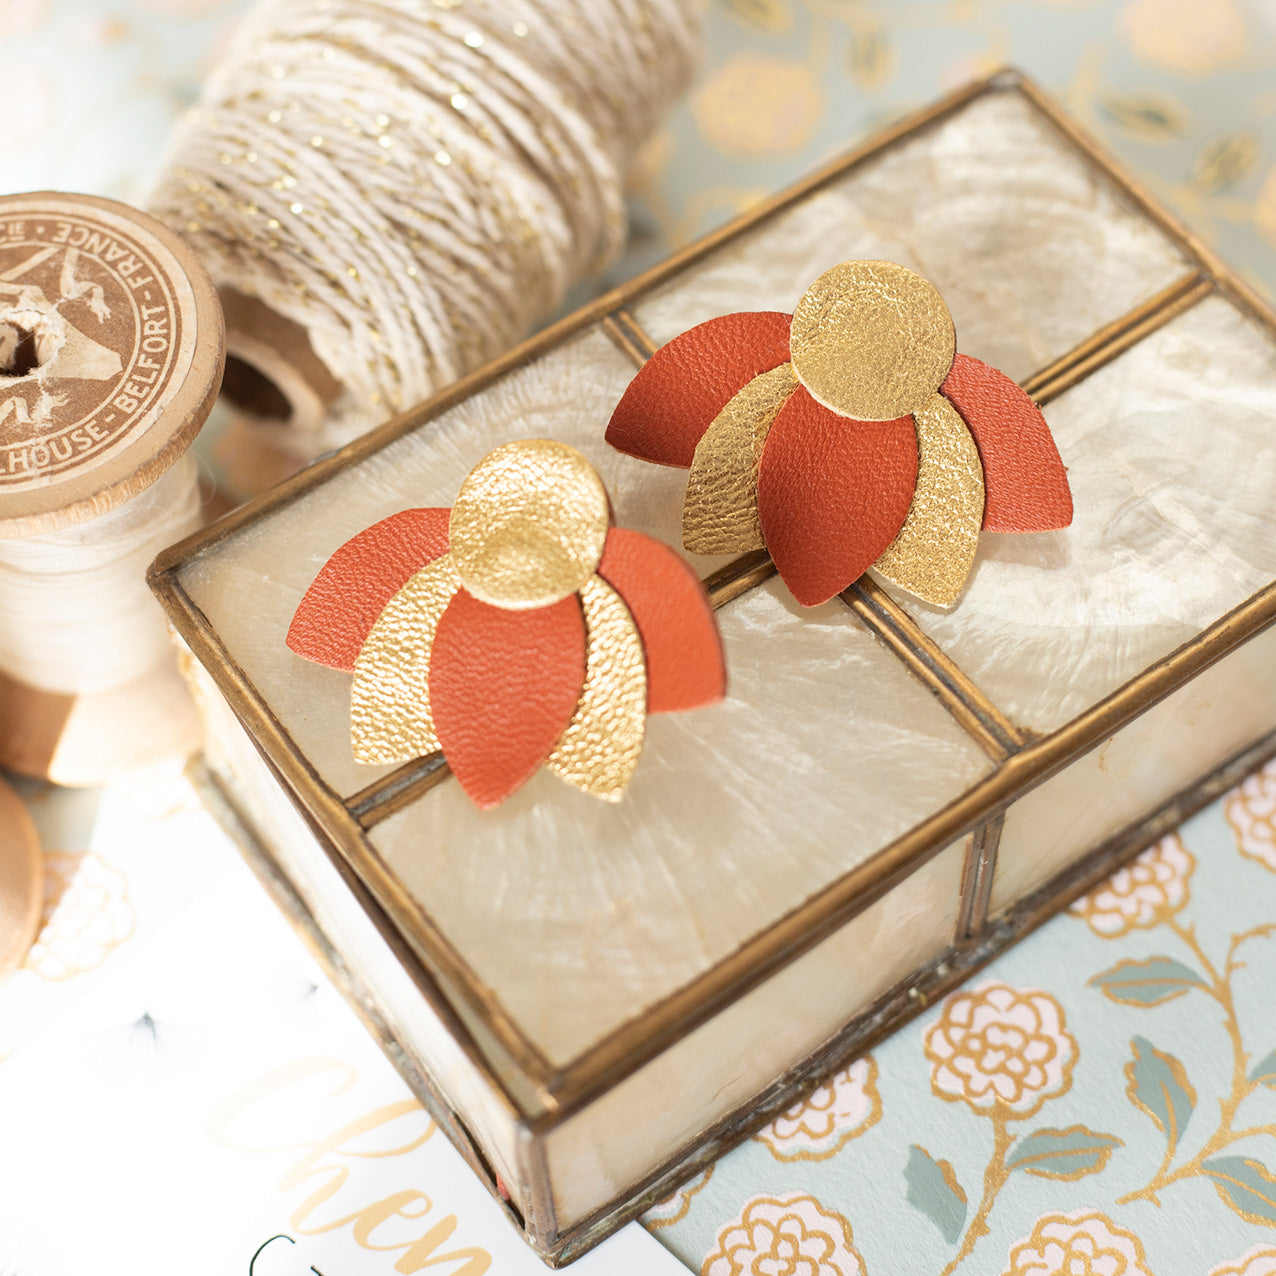 Large Lotus Flower stud earrings - brown and gold